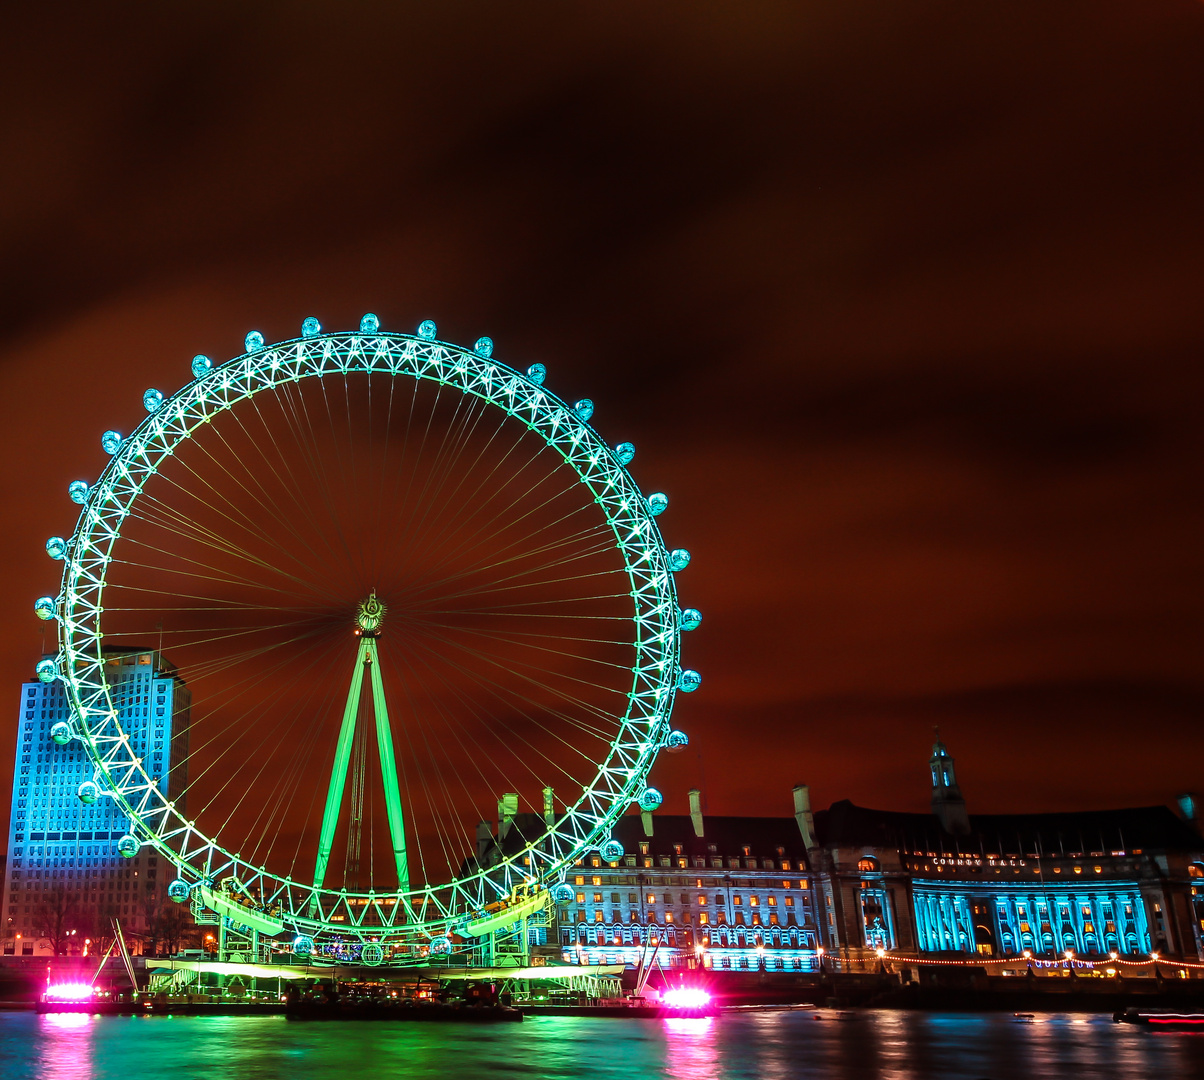 London Eye - Farbimpression